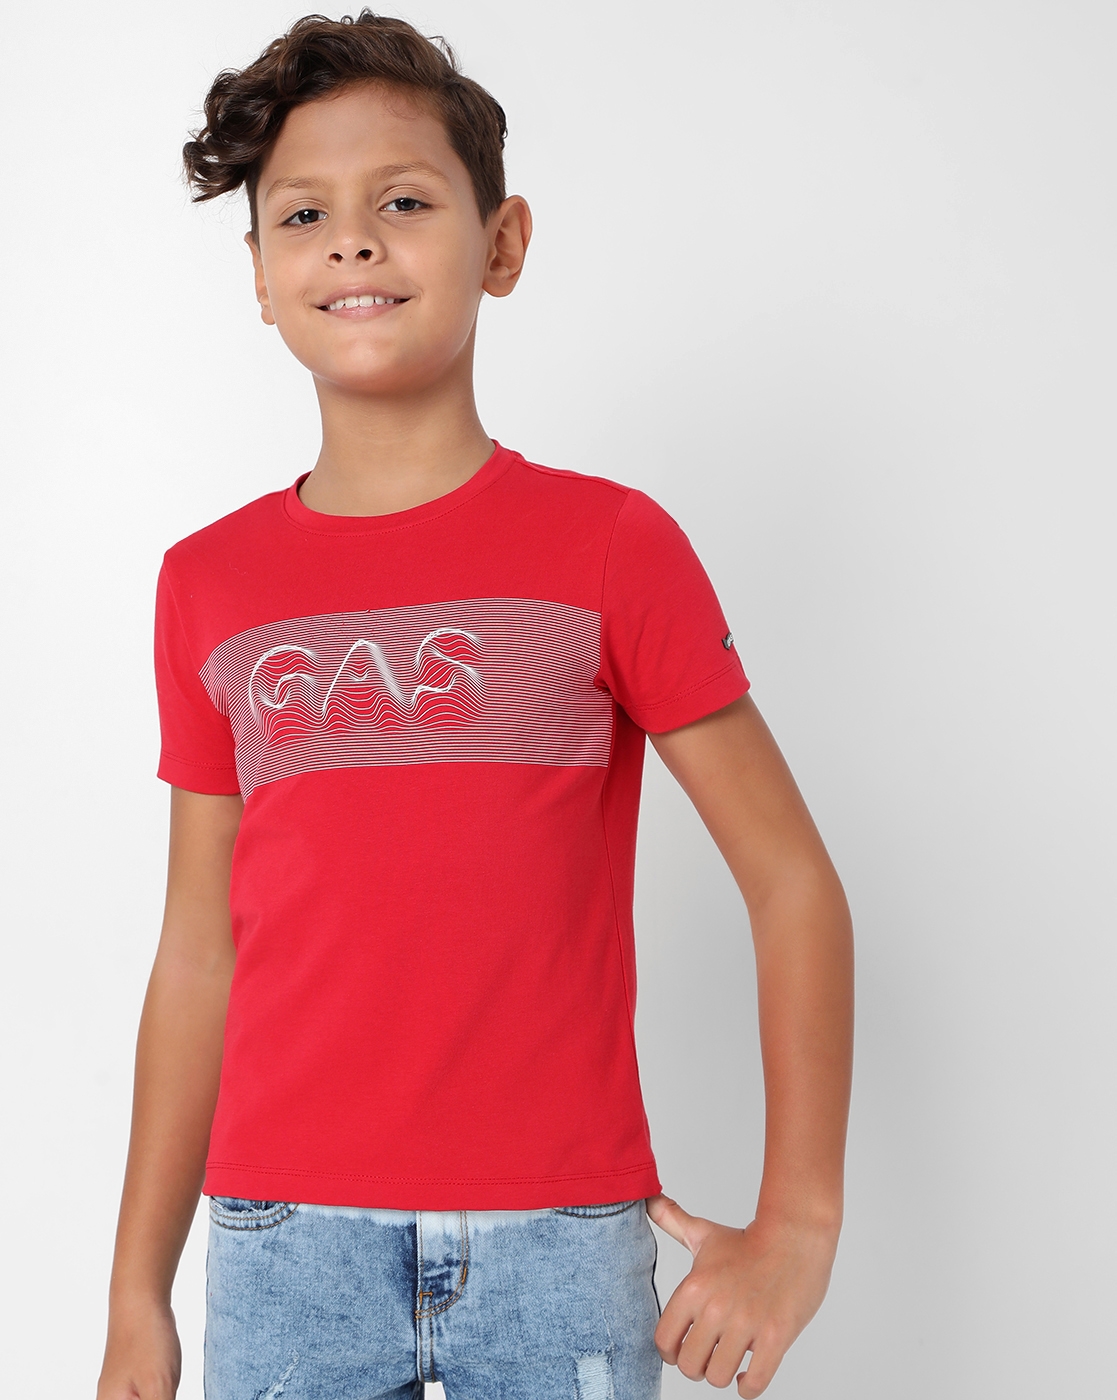 GAS | Boy's Scuba Jr Illusion IN T-Shirt